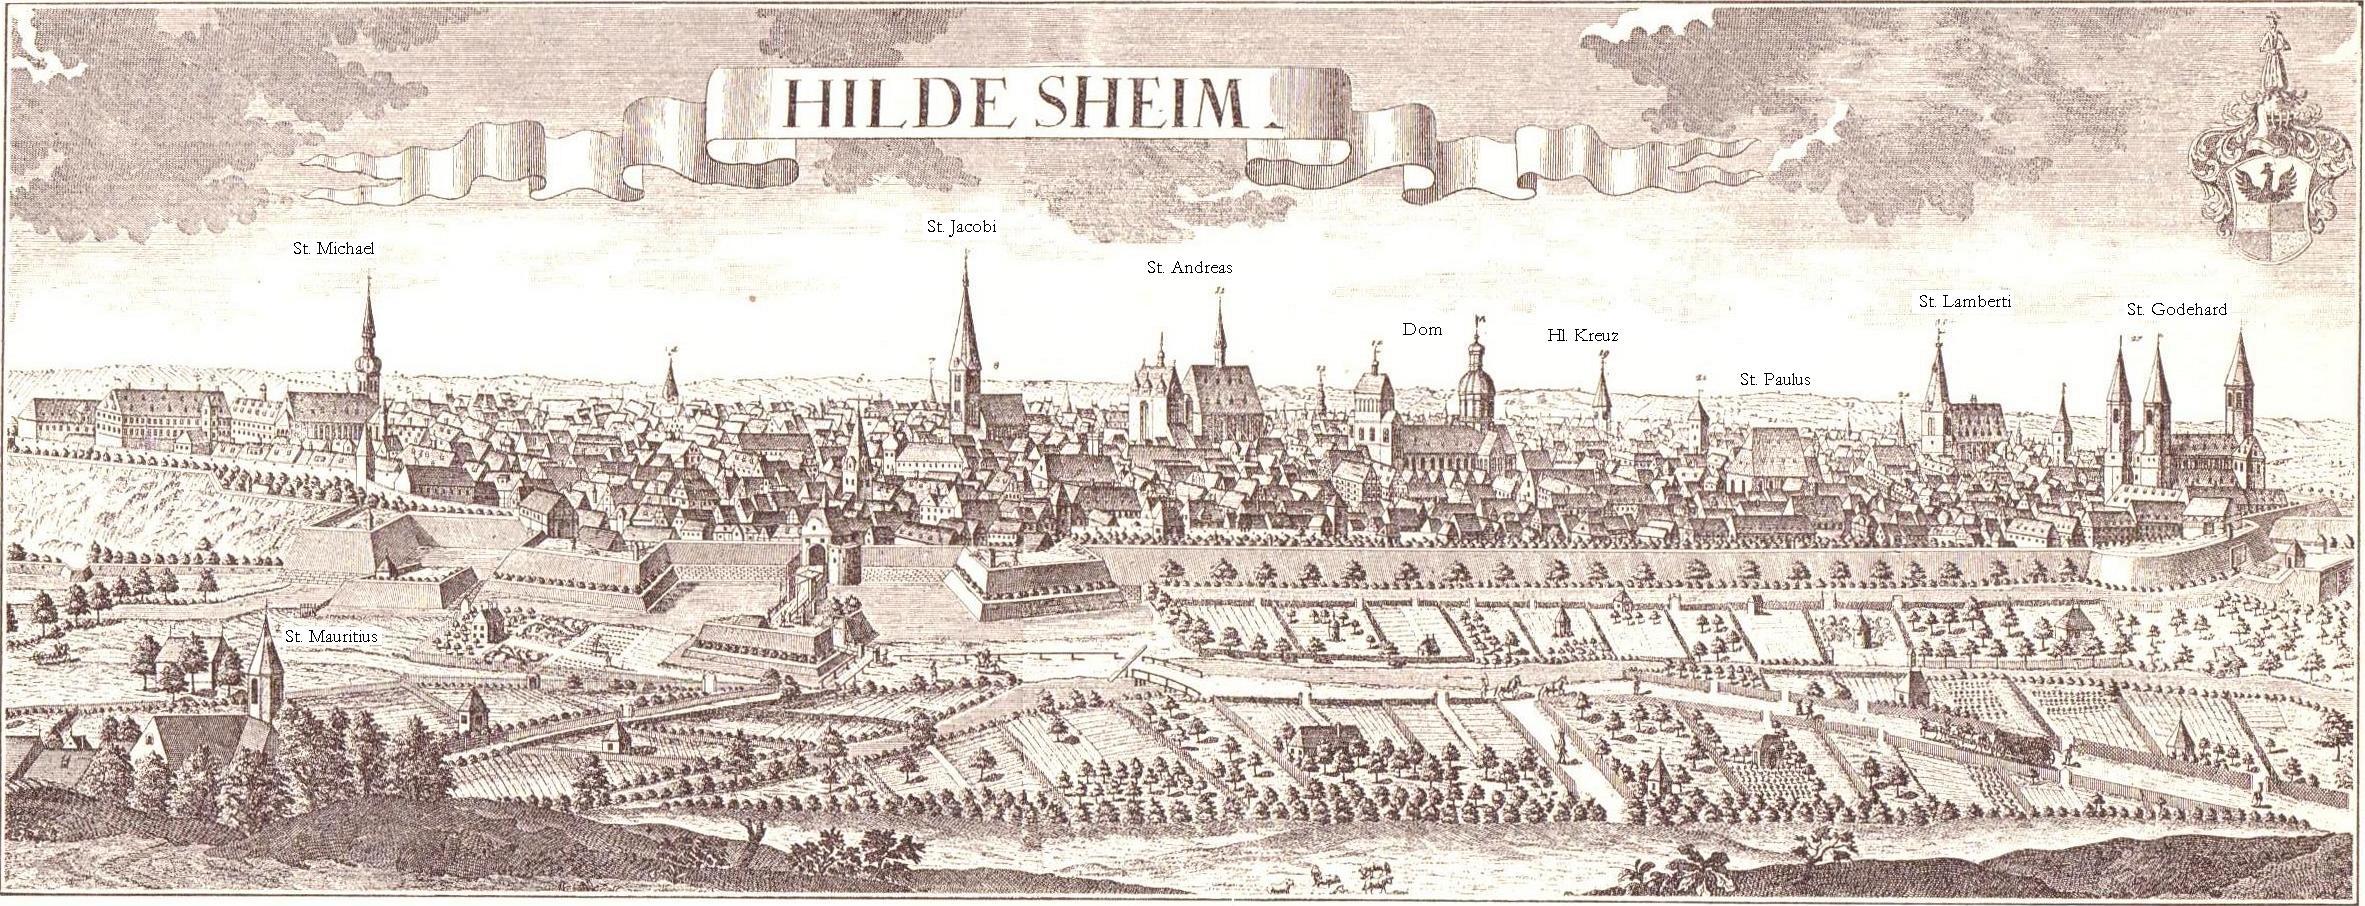 Hildesheim_1729